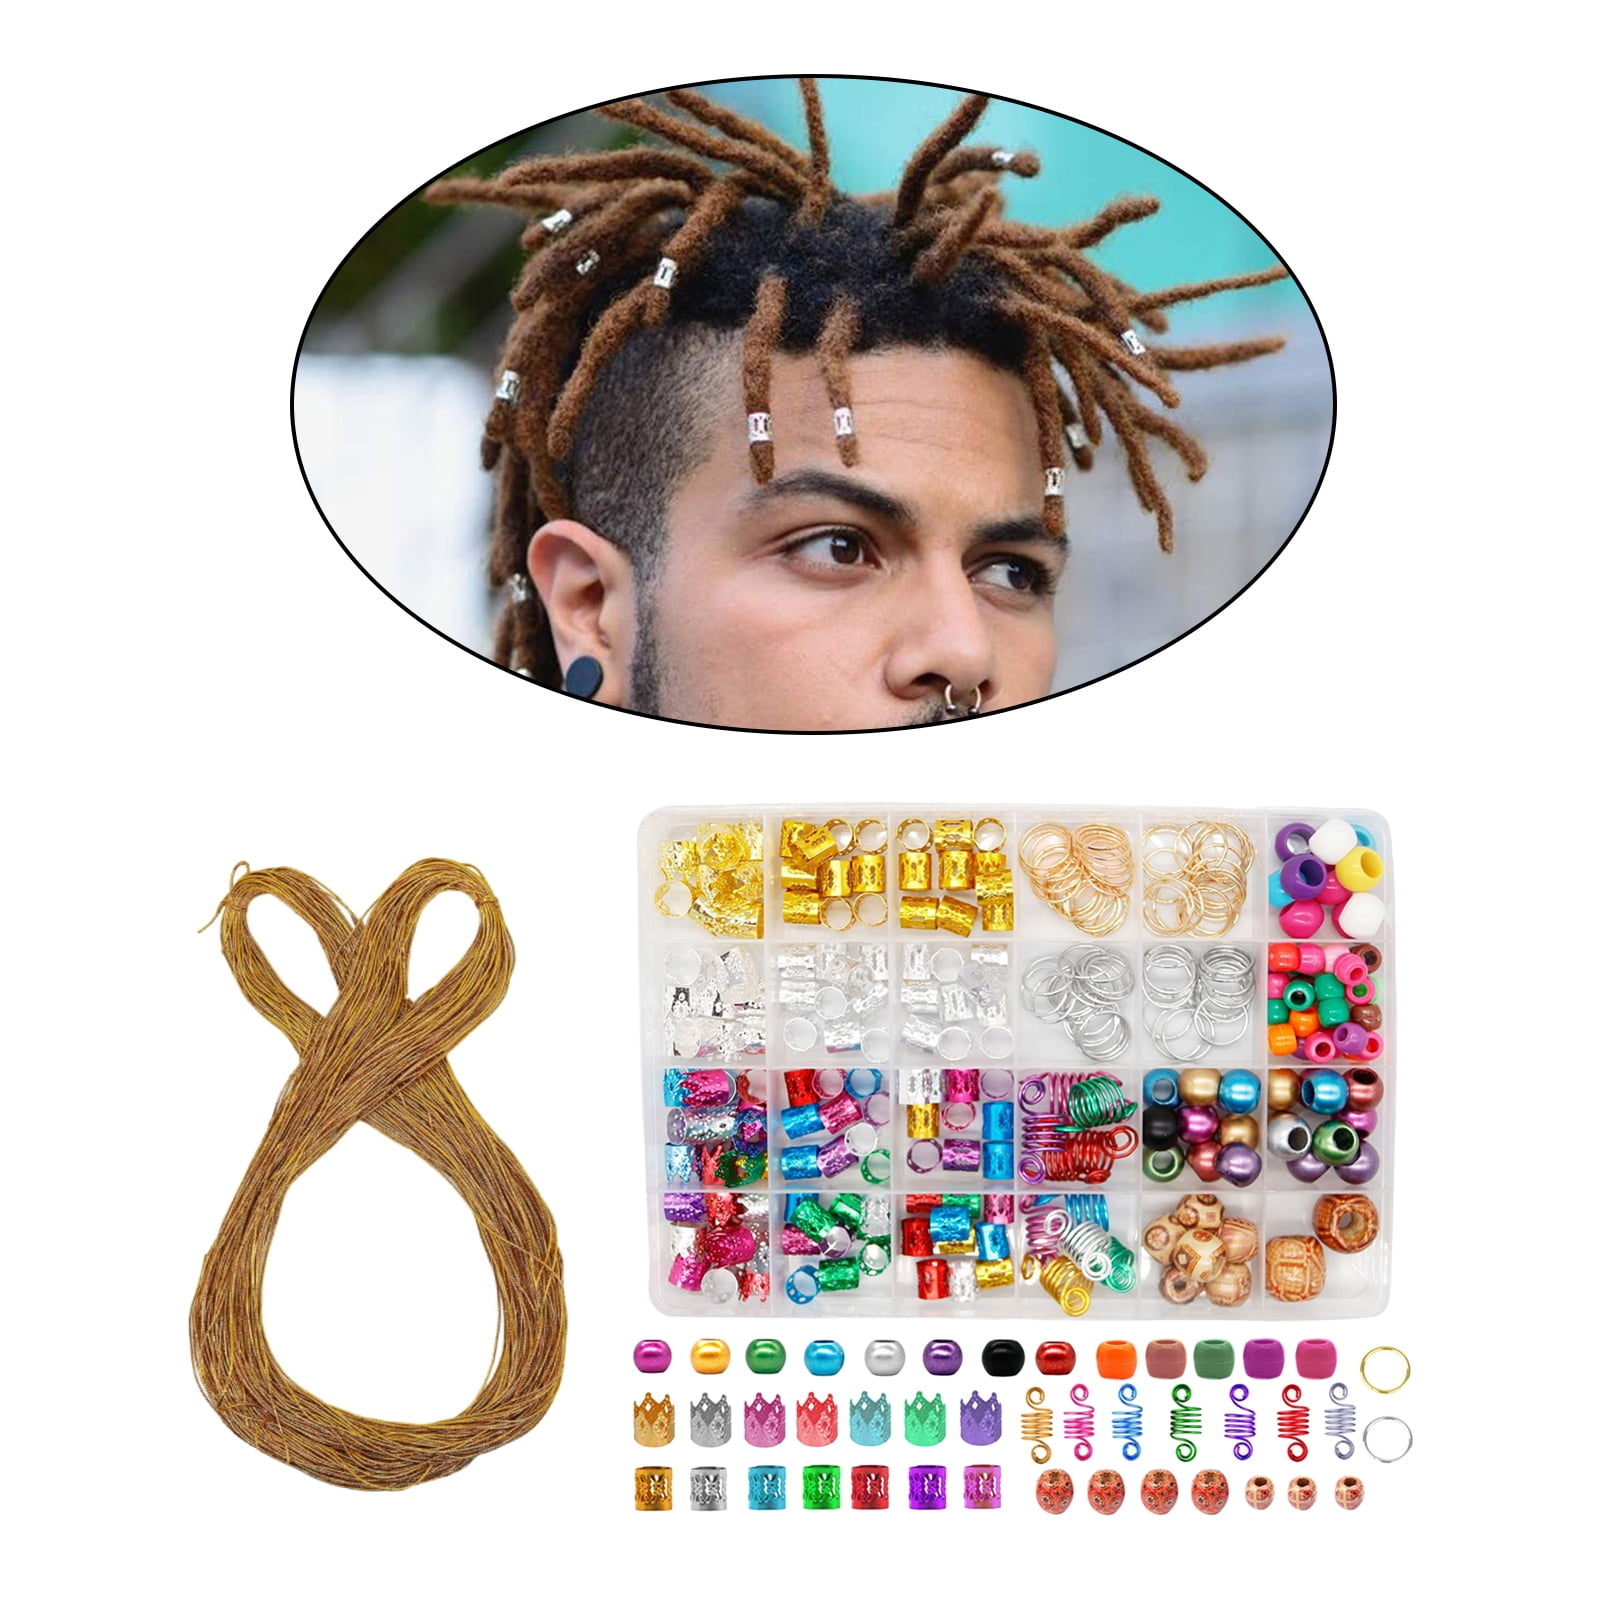 50PCS Dreadlocks Beads Jewelry Hair Braid Rings Clips Dreadlock